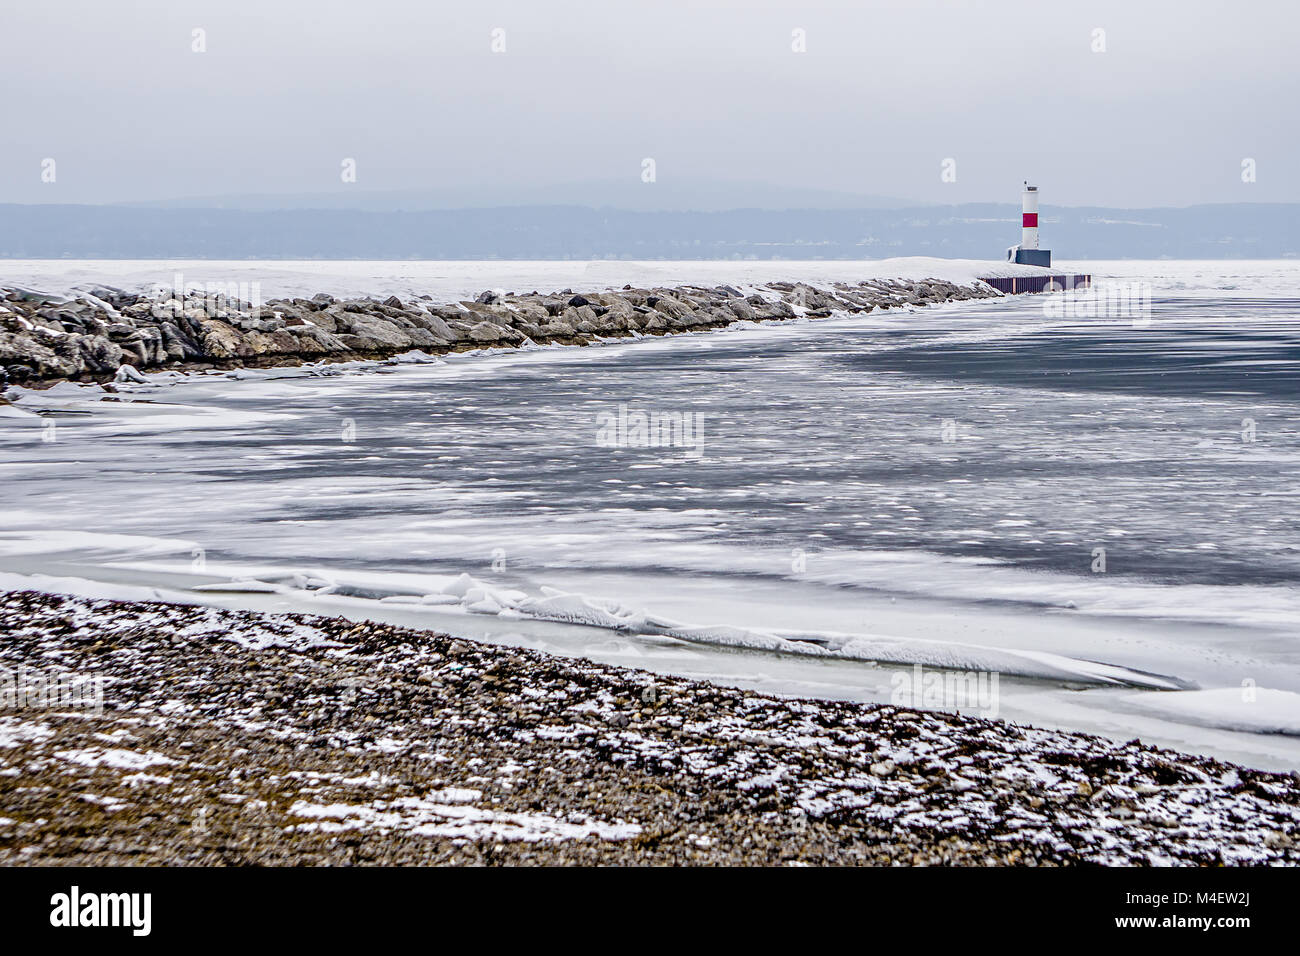 frozen winter scenes on great lakes Stock Photo